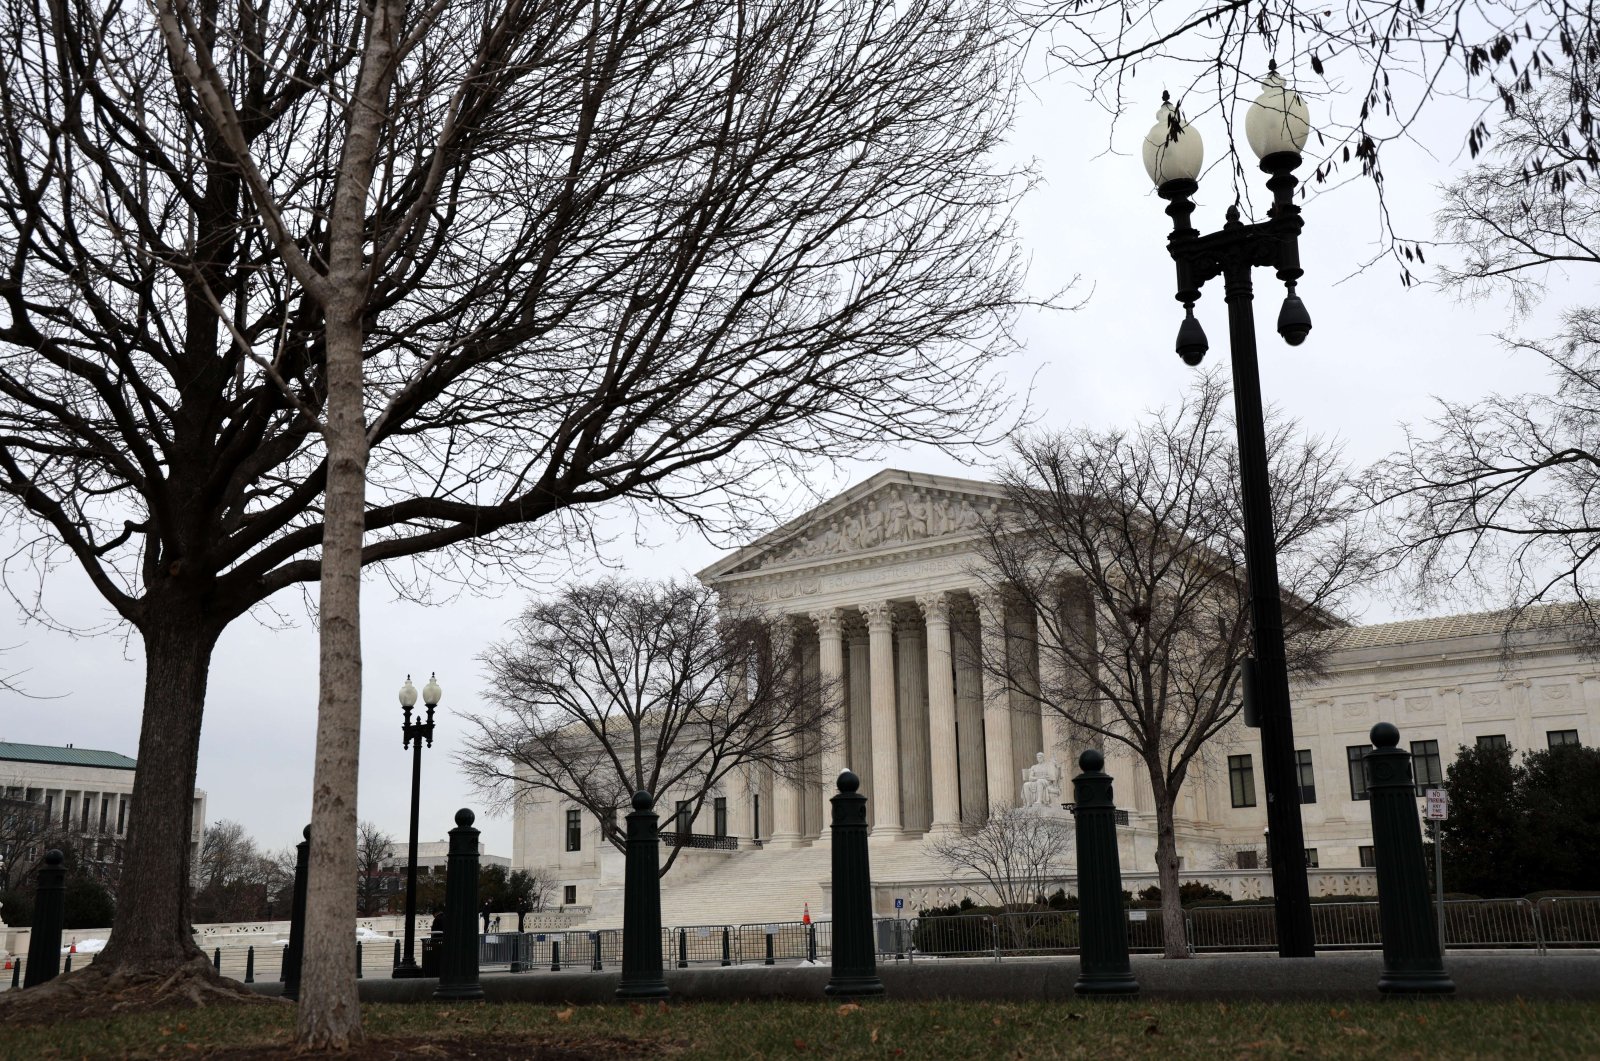 The U.S. Supreme Court is seen in Washington, D.C., U.S., Jan. 13, 2022. (AFP Photo)